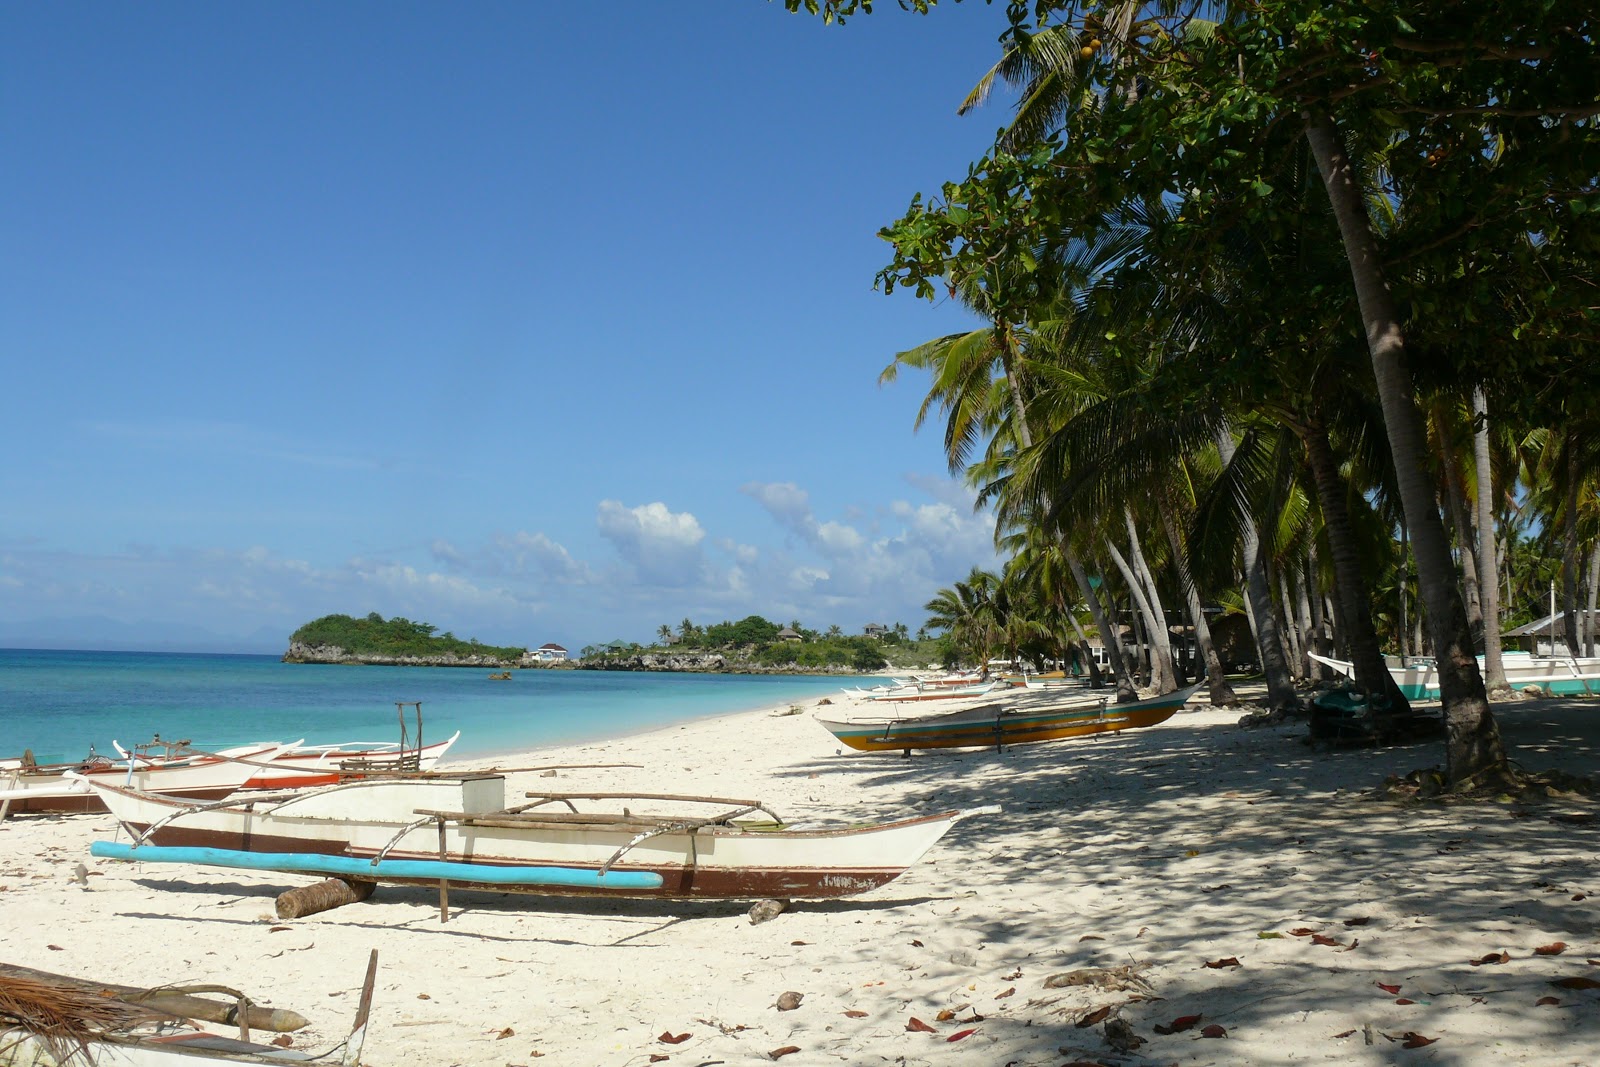 Photo of Malapascua Island Beach - popular place among relax connoisseurs